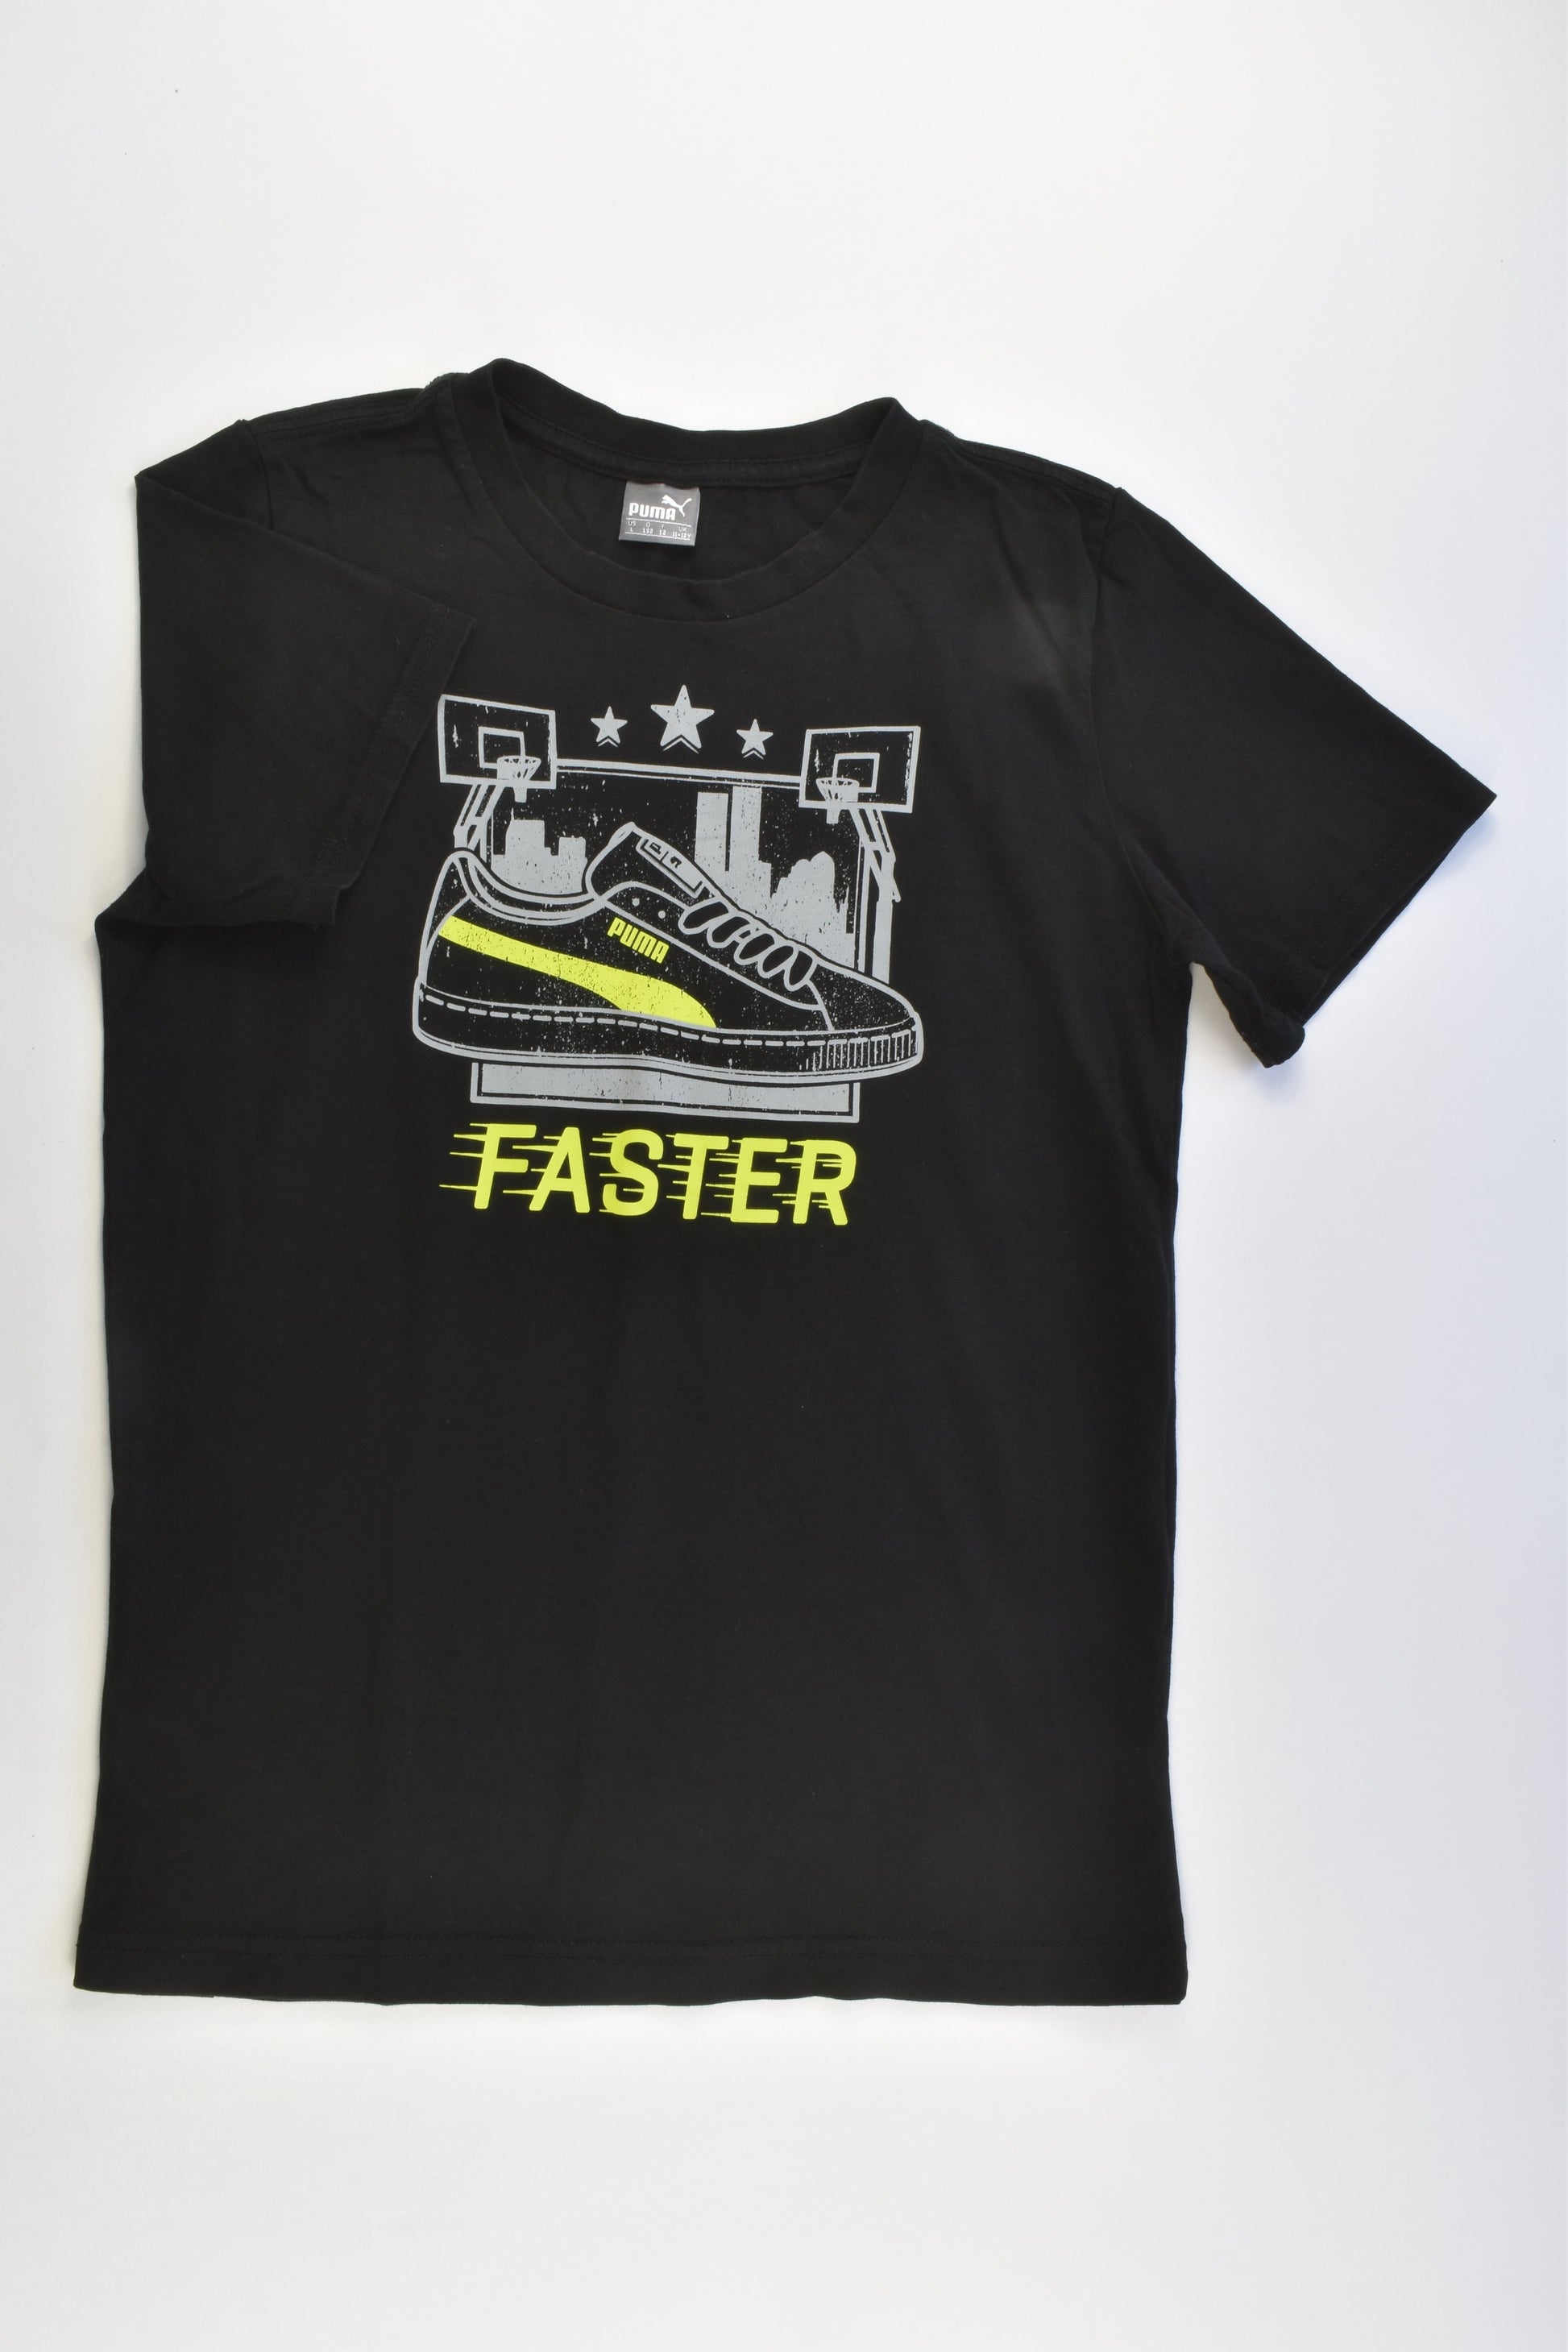 Puma Size 11-12 'Faster' T-shirt